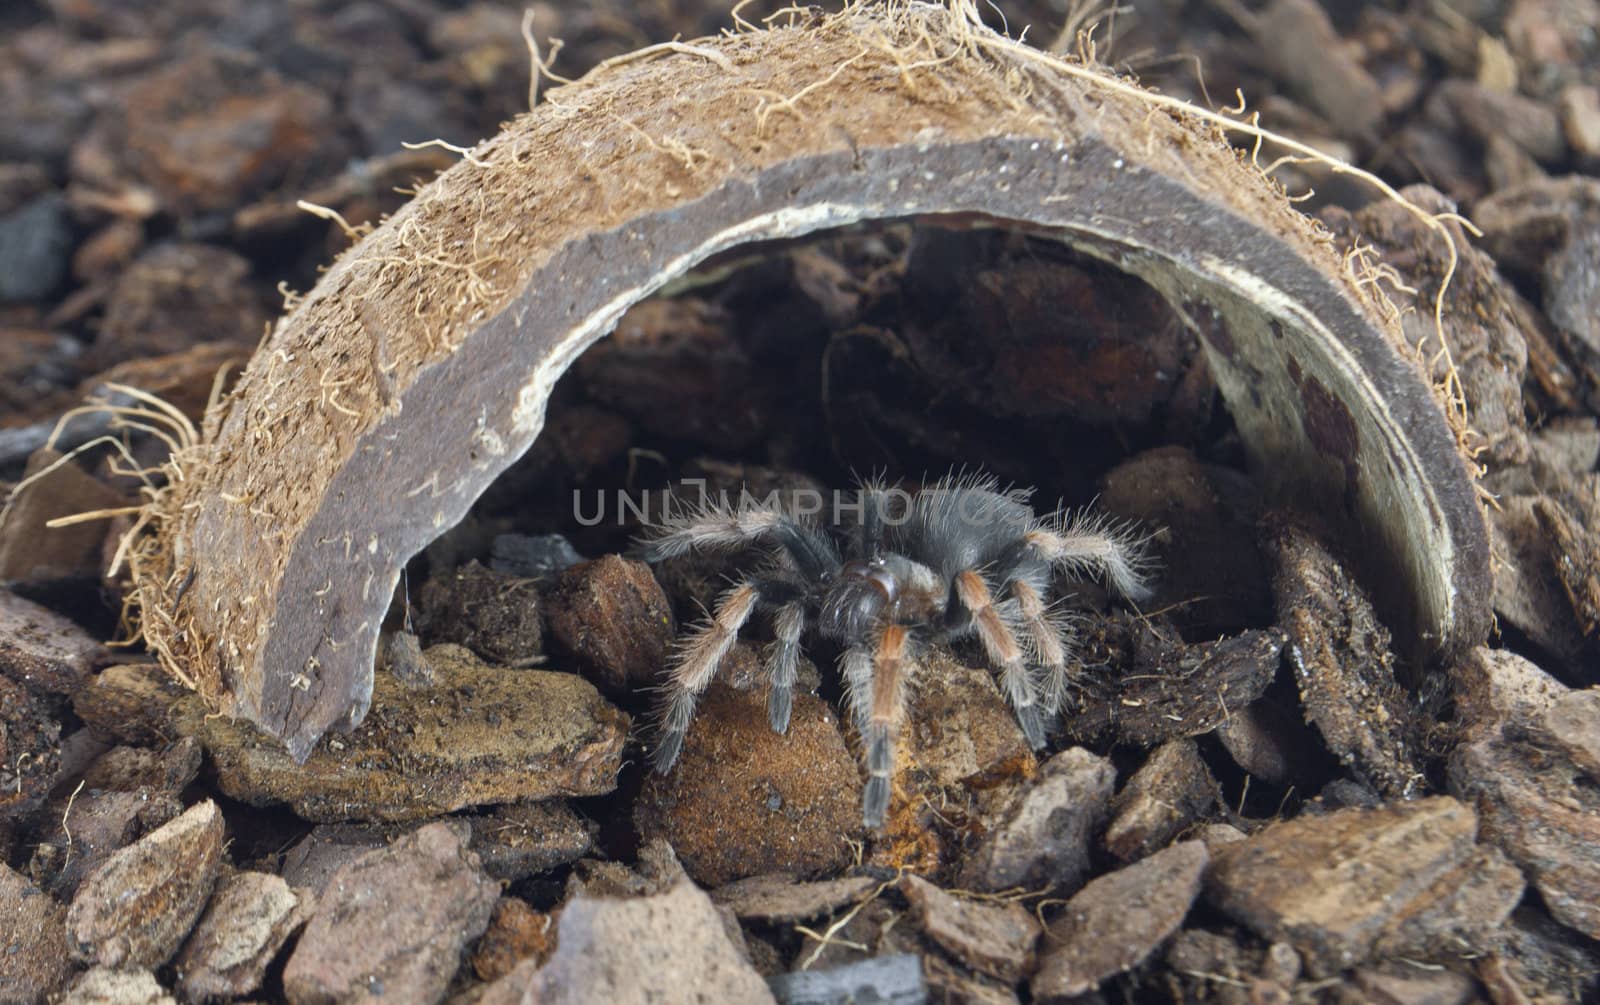 Tarantula spider in a coconut shelter